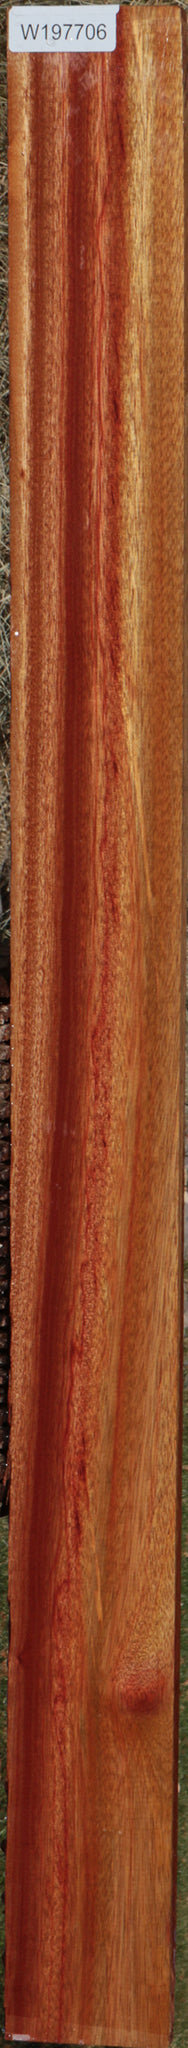 Bloodwood Lumber